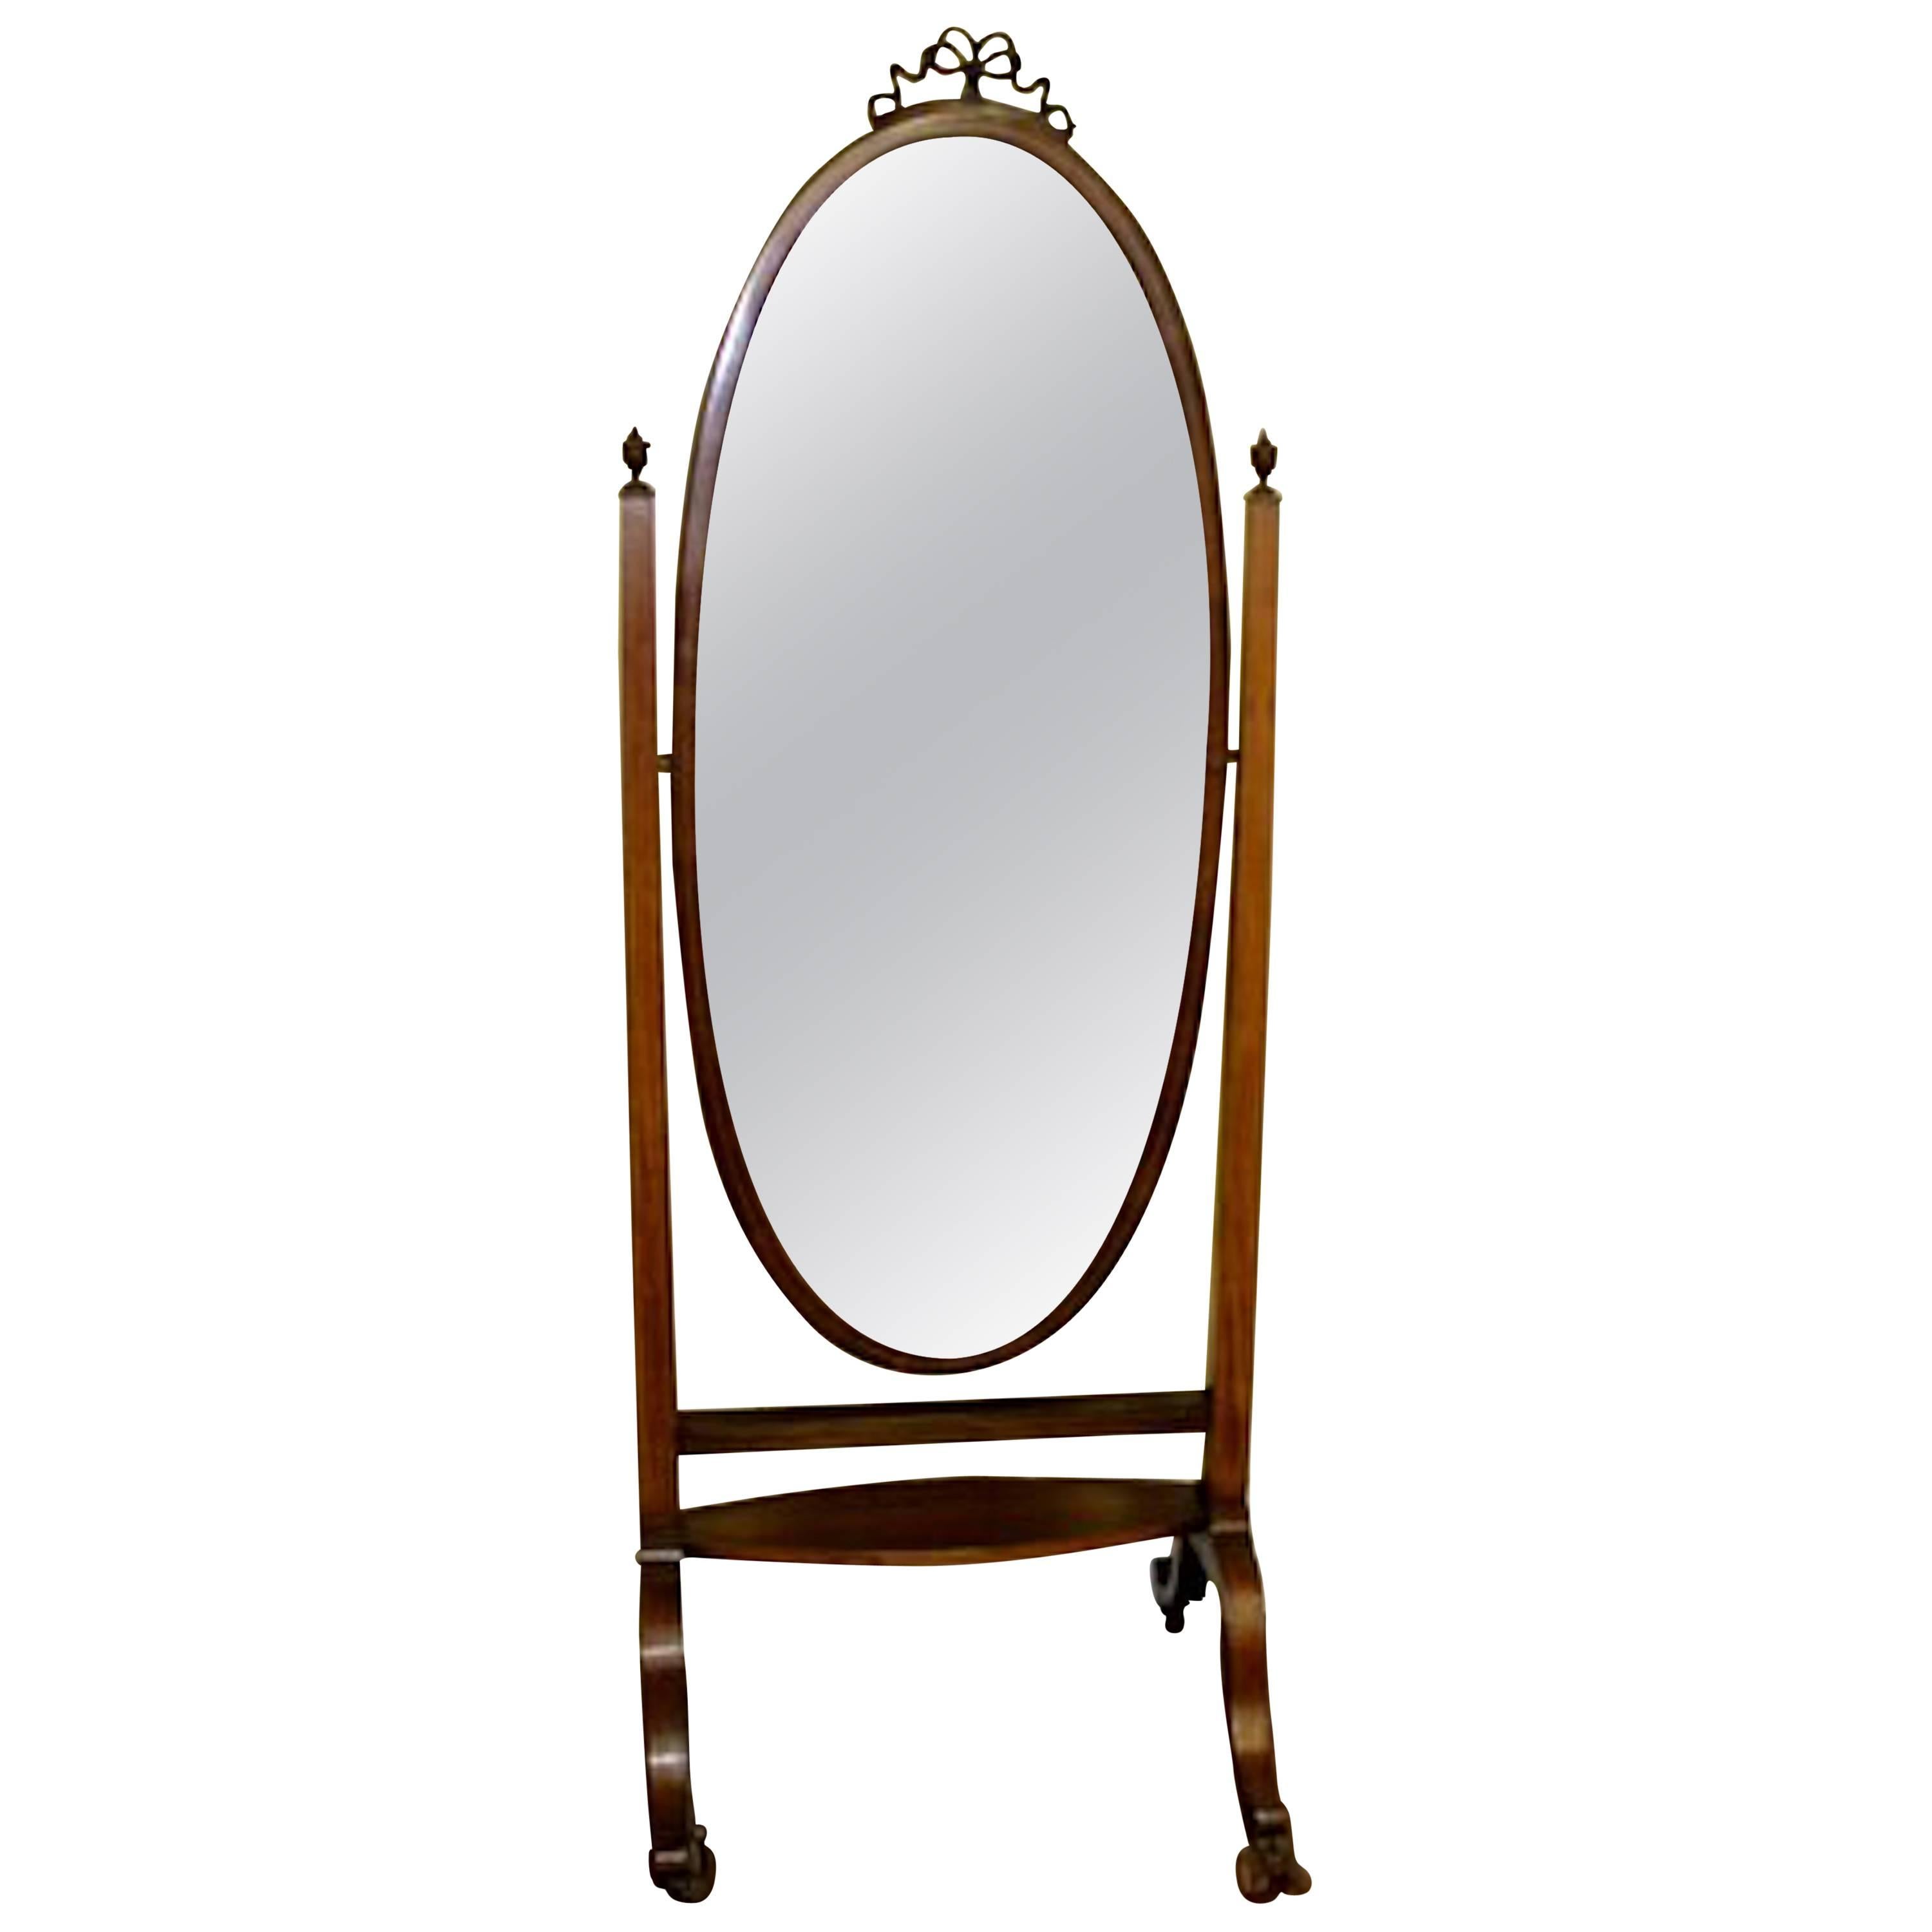 Antique English "Adam" Style Inlaid Mahogany Adjustable Cheval Mirror